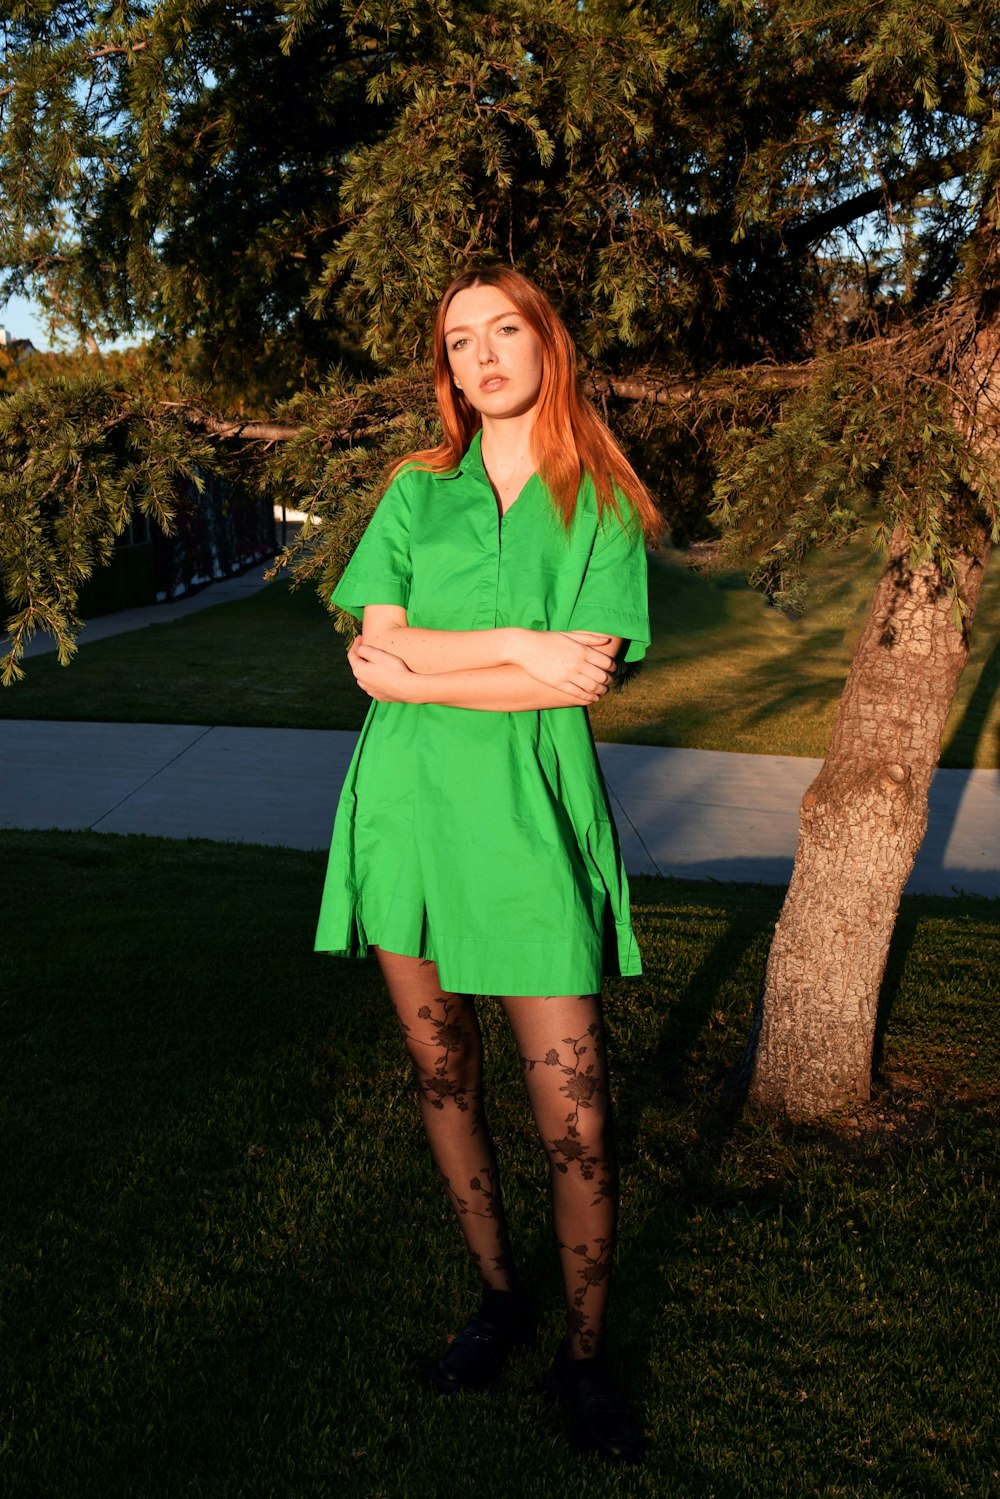 une femme en robe verte debout dans l’herbe